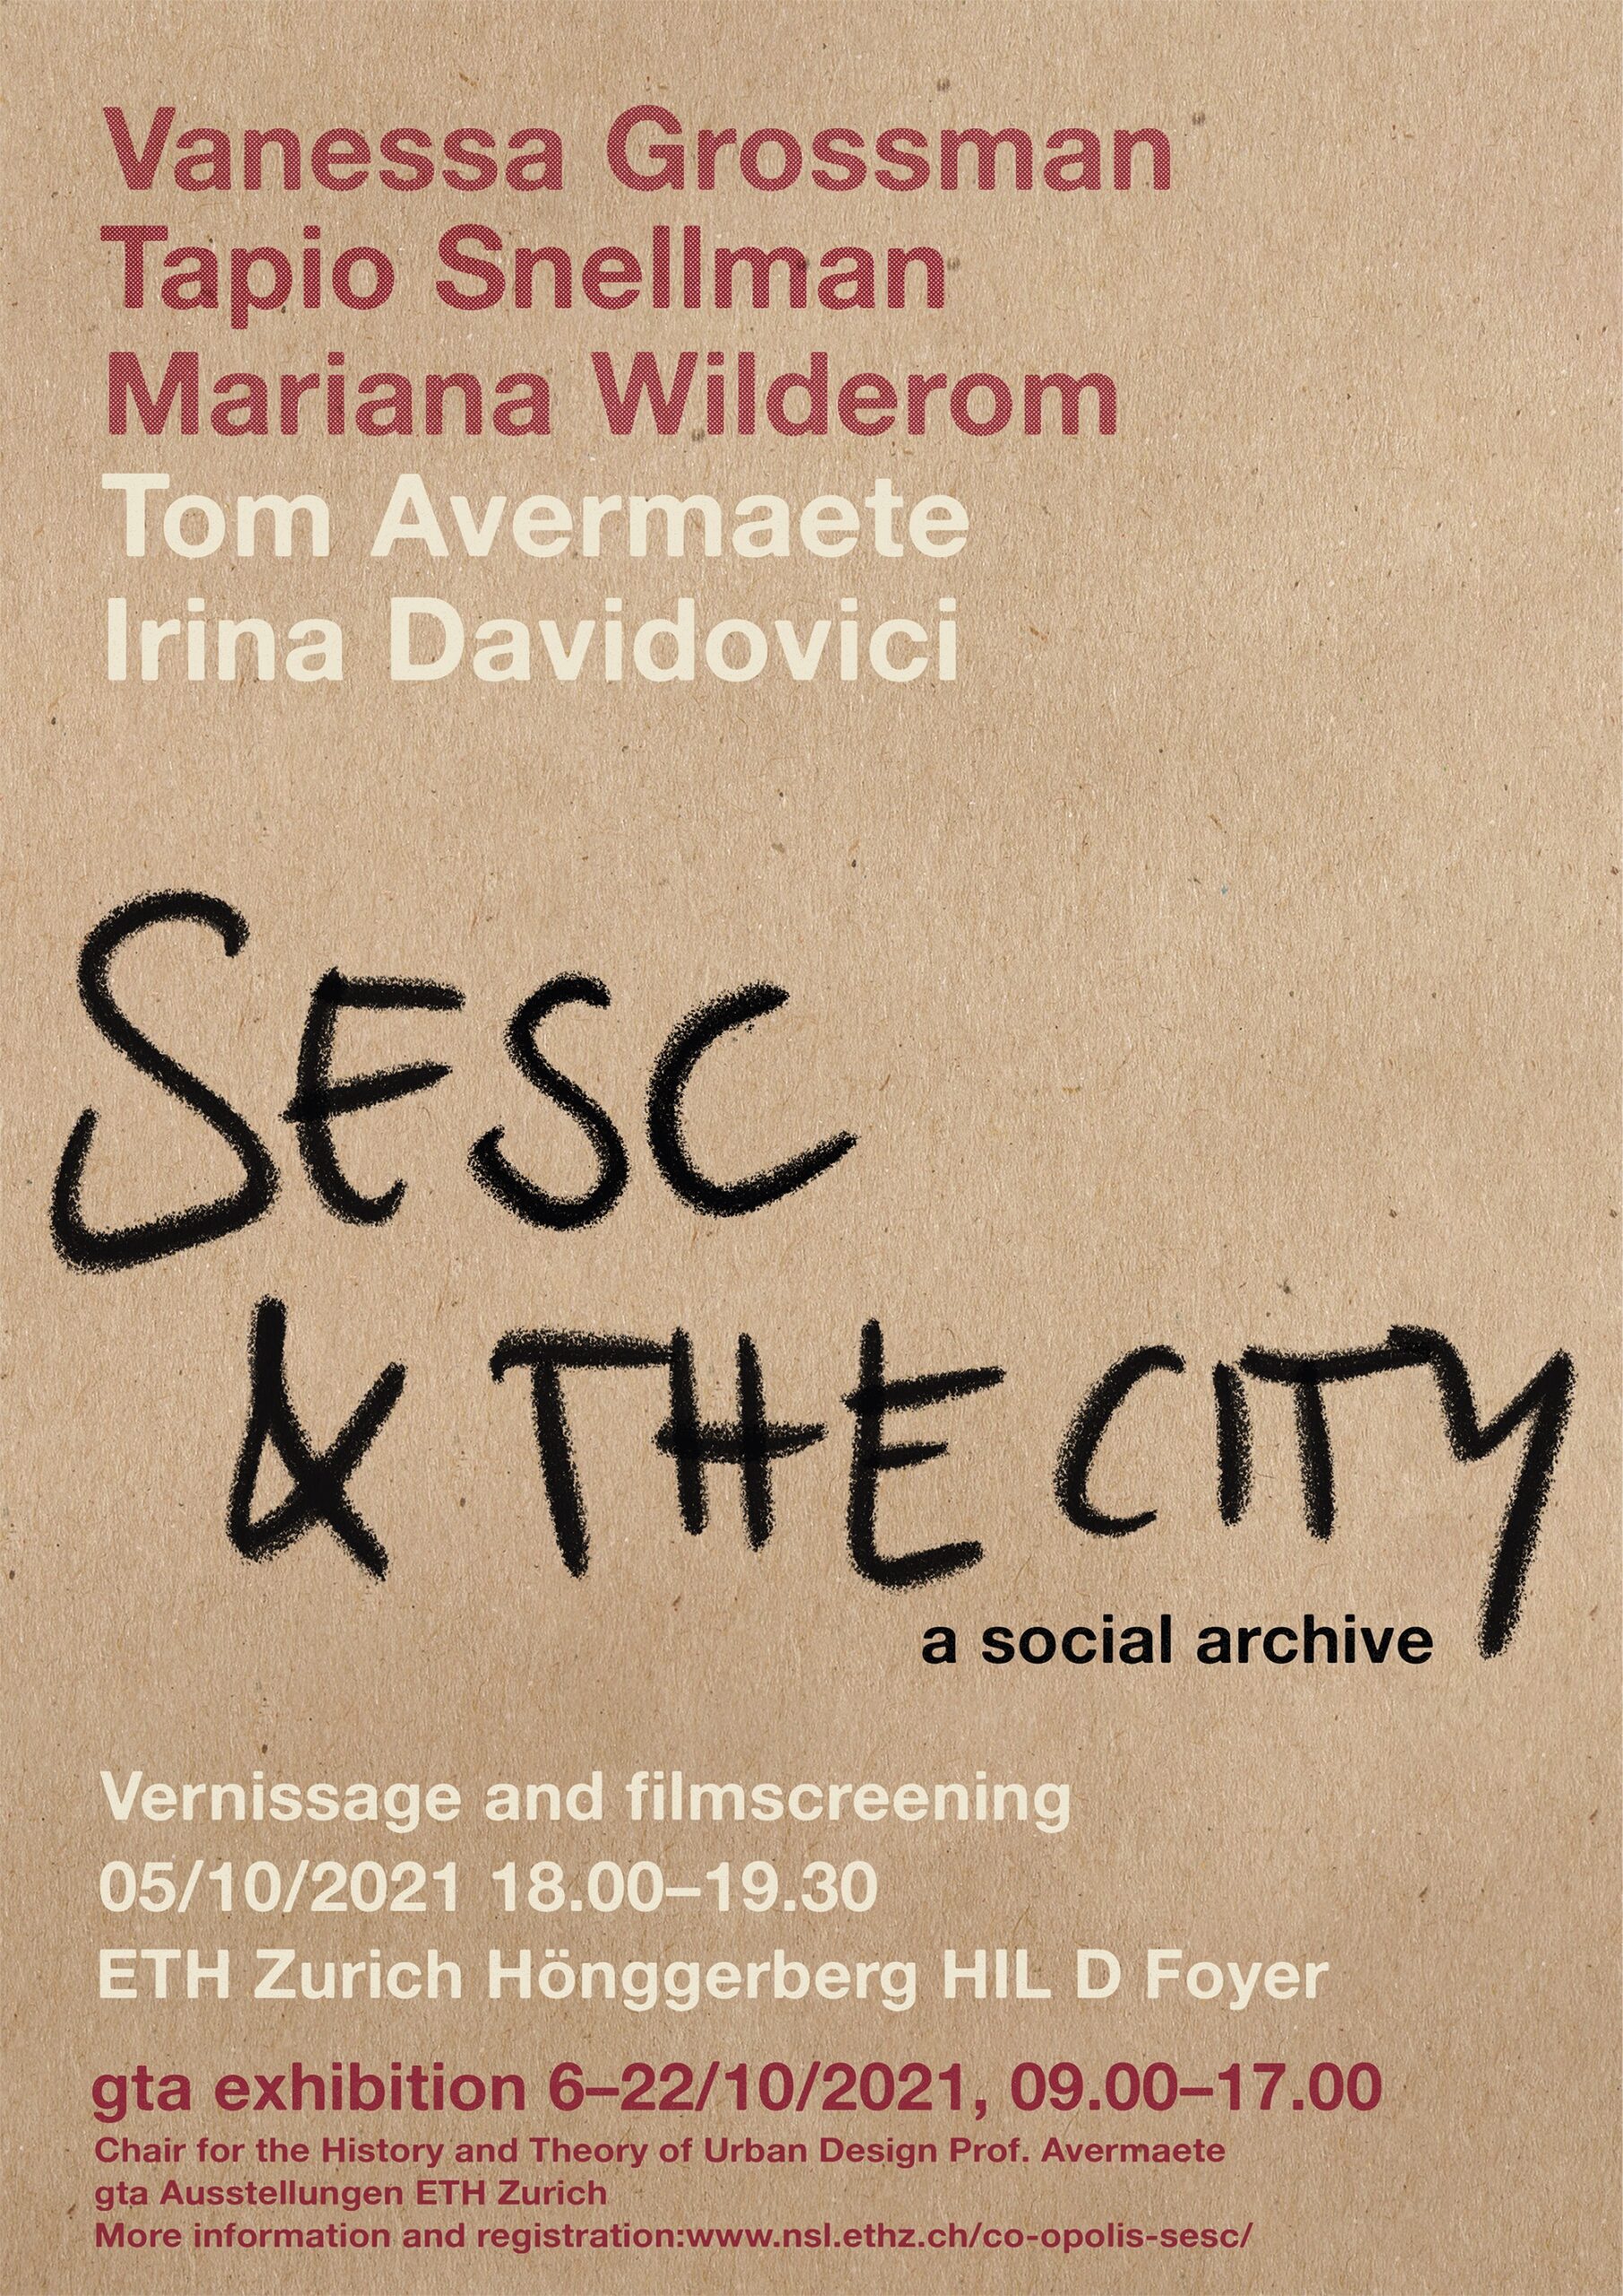 SESC & The City - a social archive